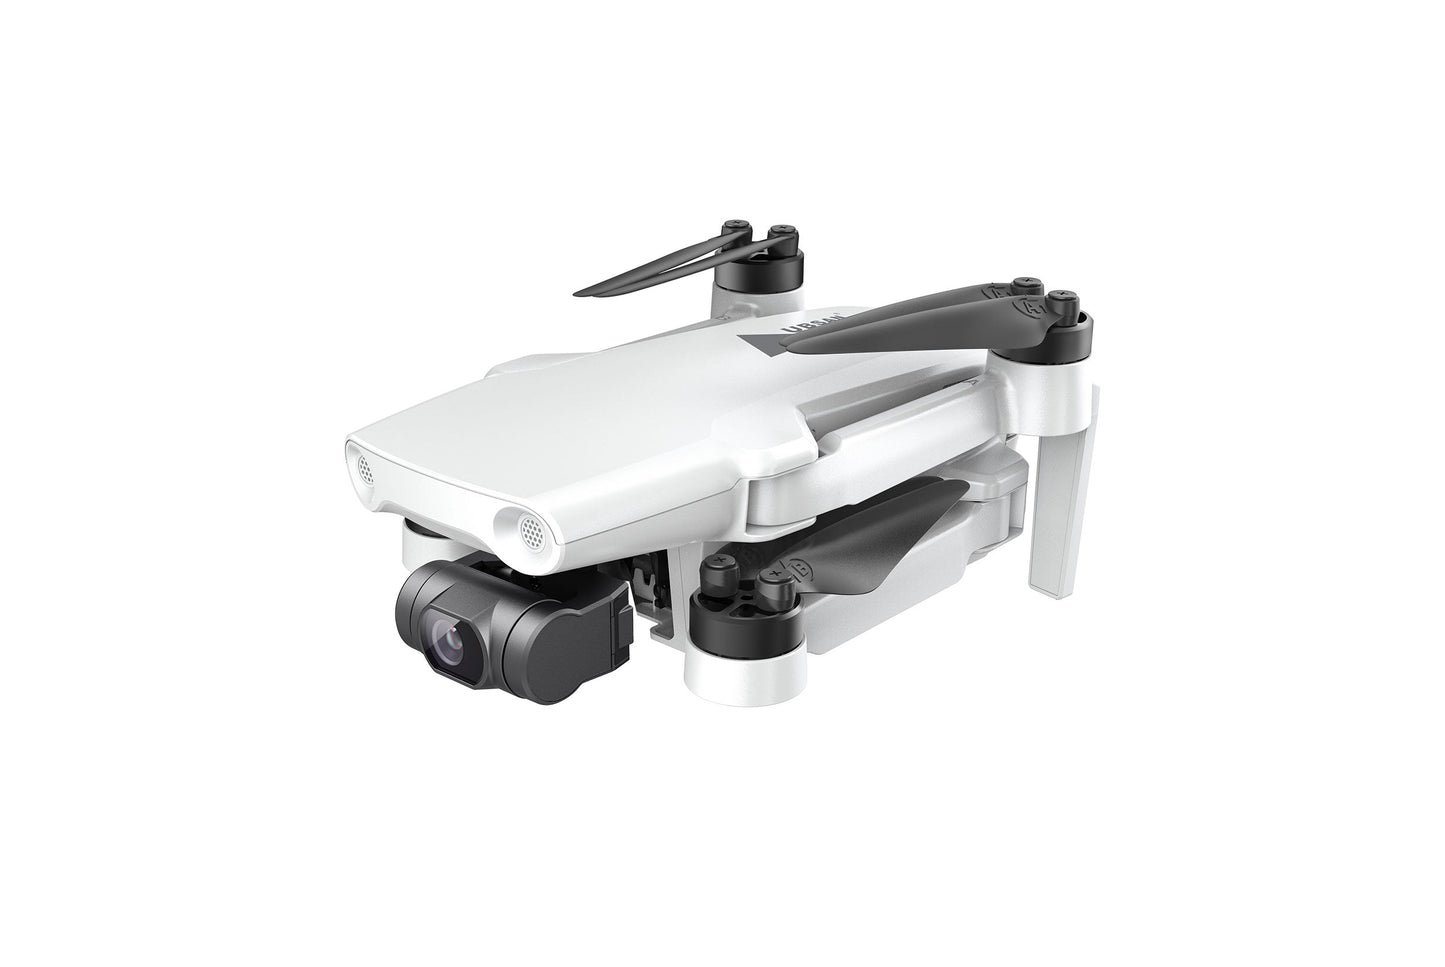 Hubsan Zino Mini SE R Drone | 10KM Flight Range | 45 Minutes Flight Time | 48MP Camera - ISPEKTRUM Toys & Games